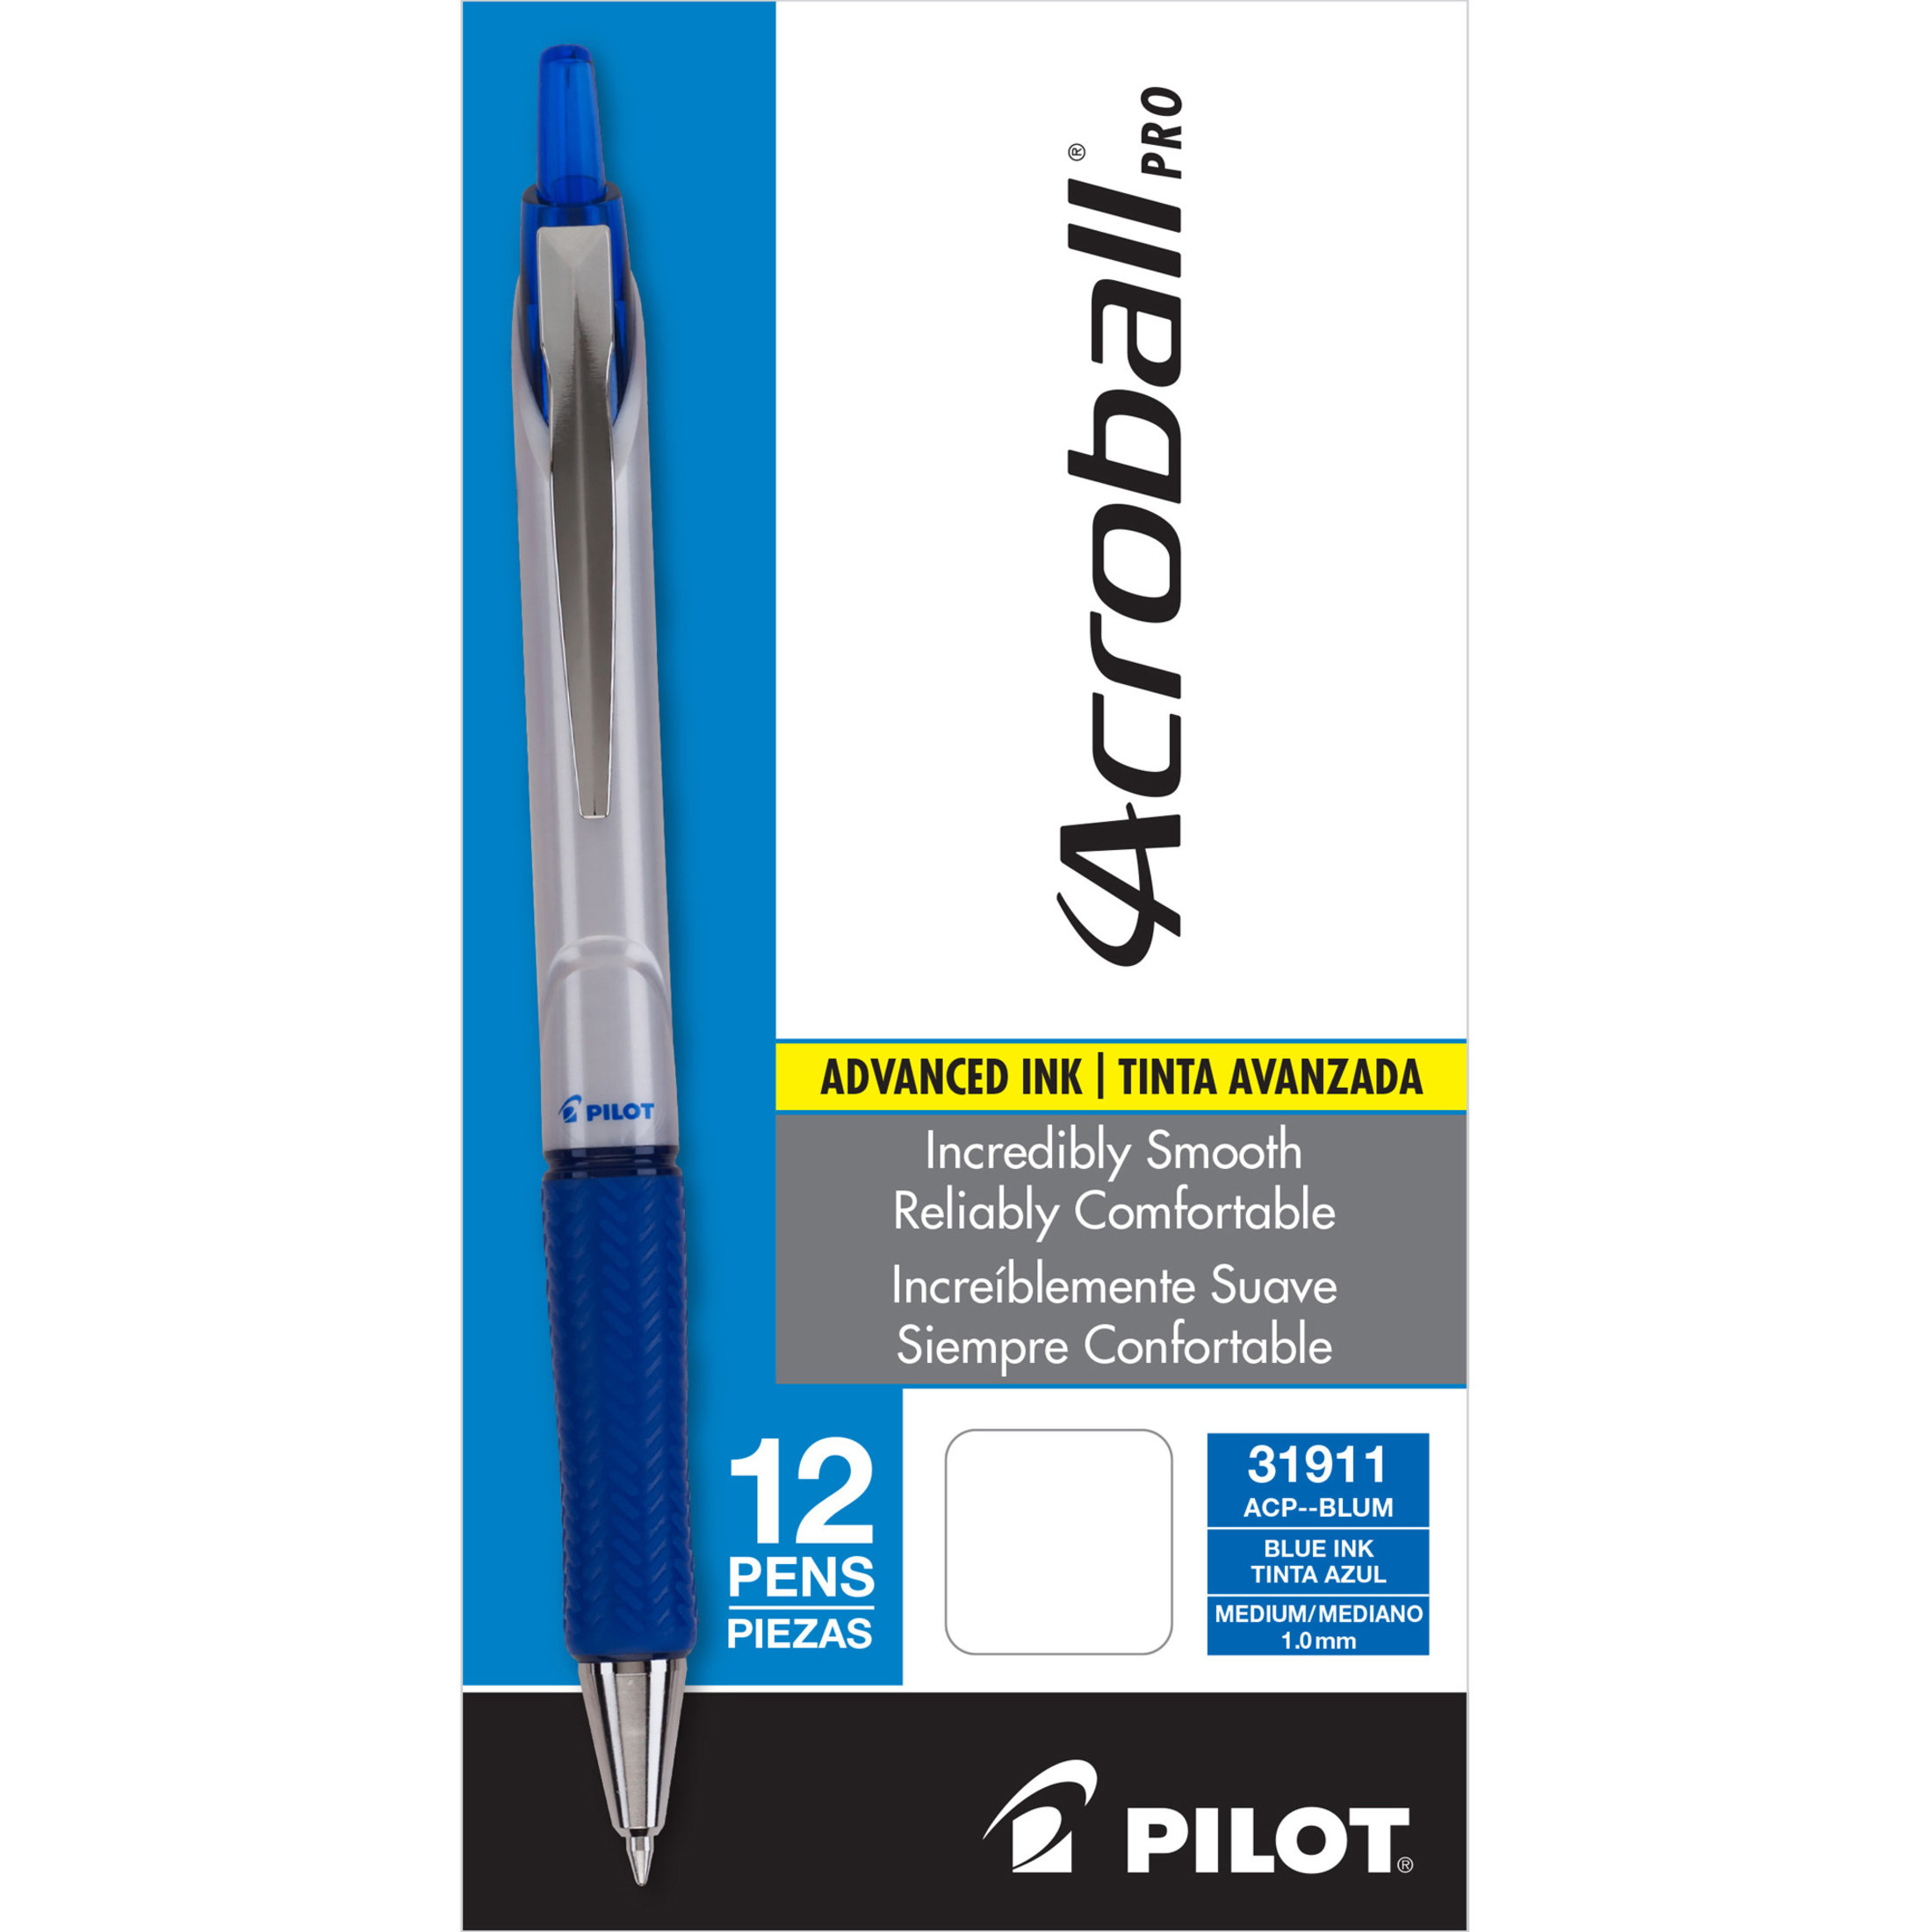 Pilot, PIL31911, Acroball Pro Hybrid Ink Ballpoint Pen, 12 / Dozen - image 2 of 3